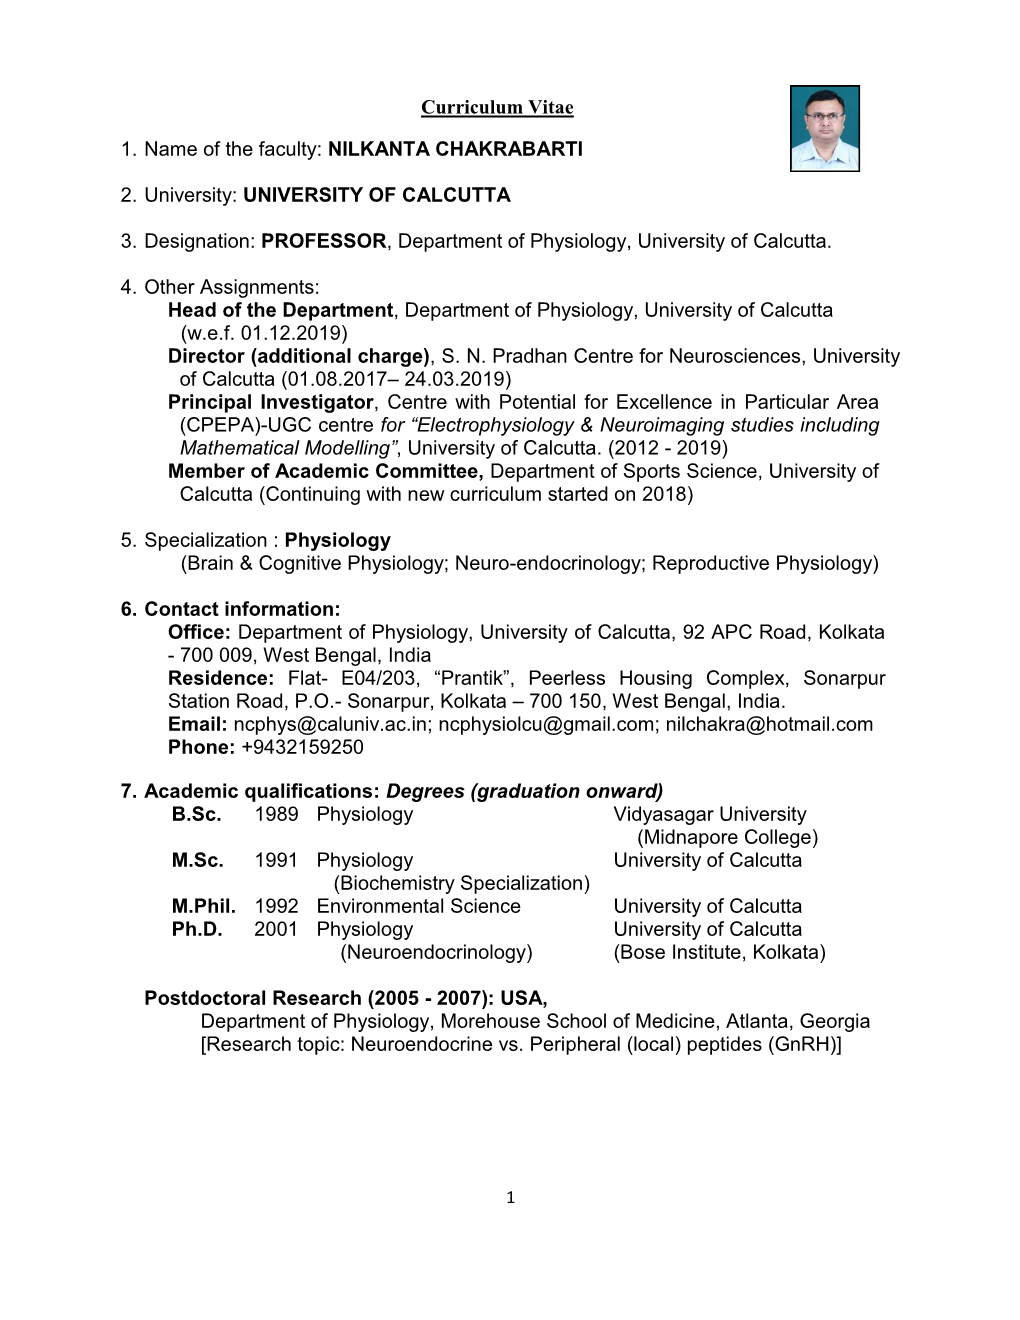 Curriculum Vitae 1. Name of the Faculty: NILKANTA CHAKRABARTI